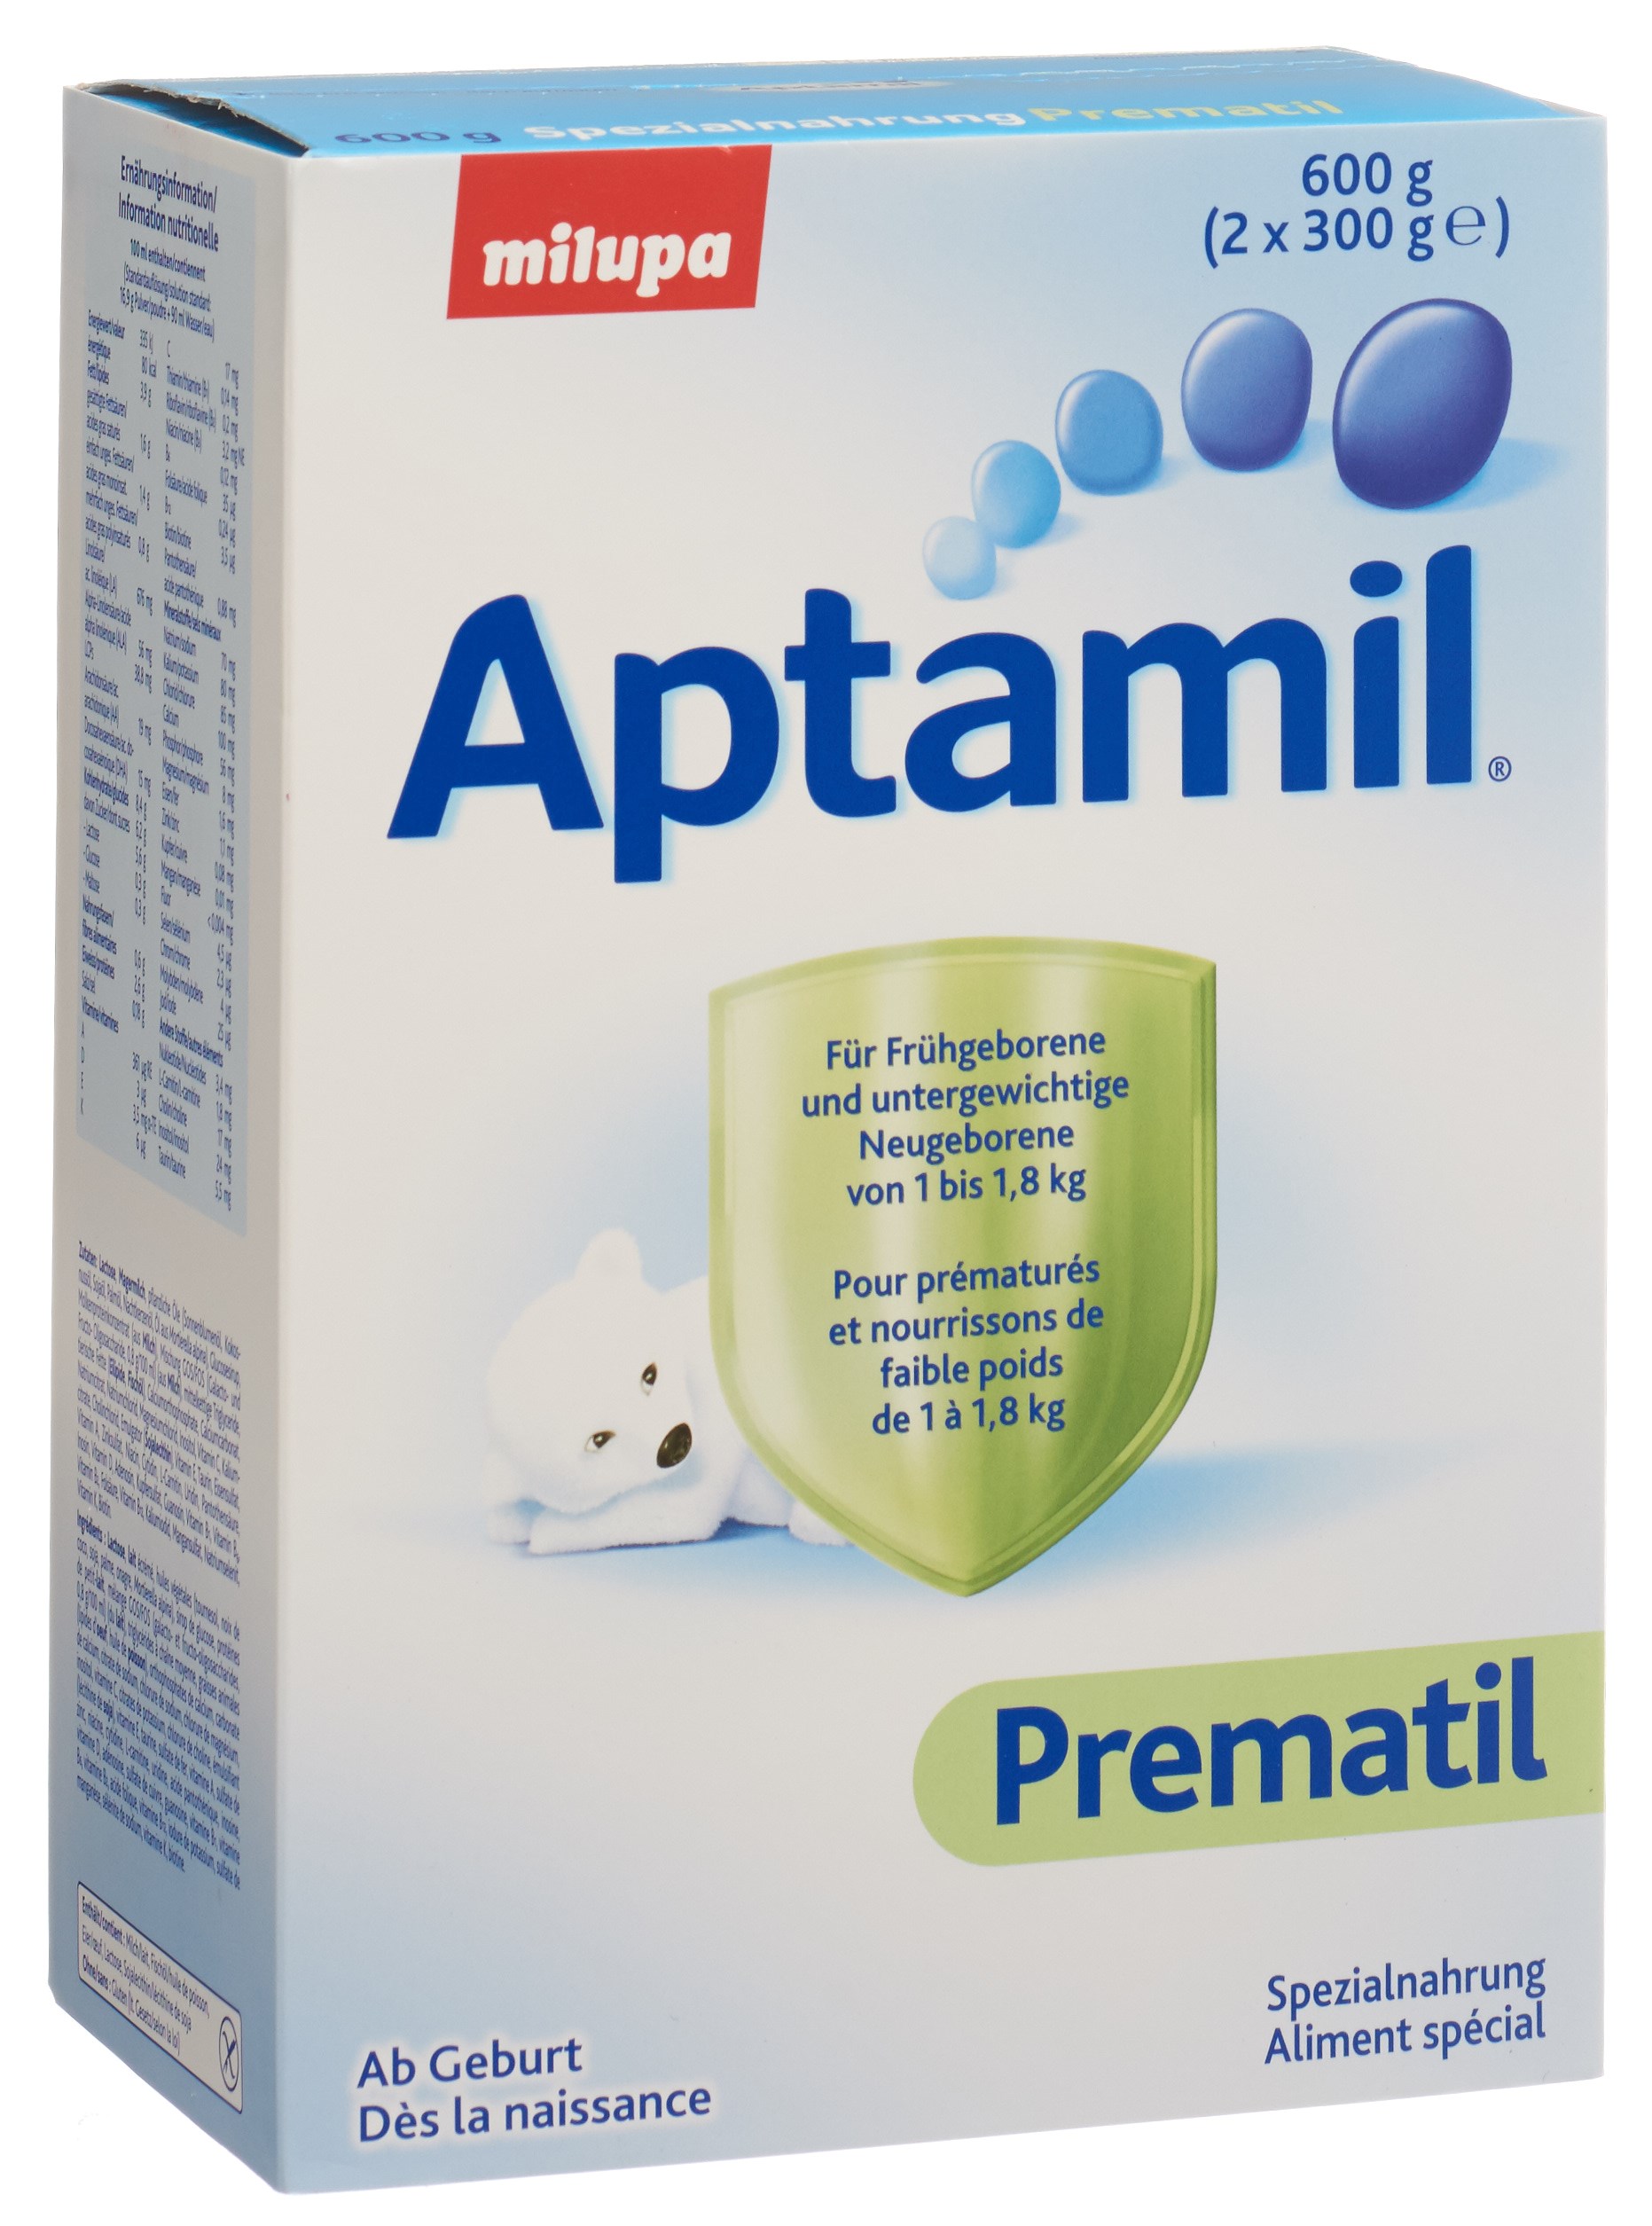 Milupa Aptamil Prematil 600 g